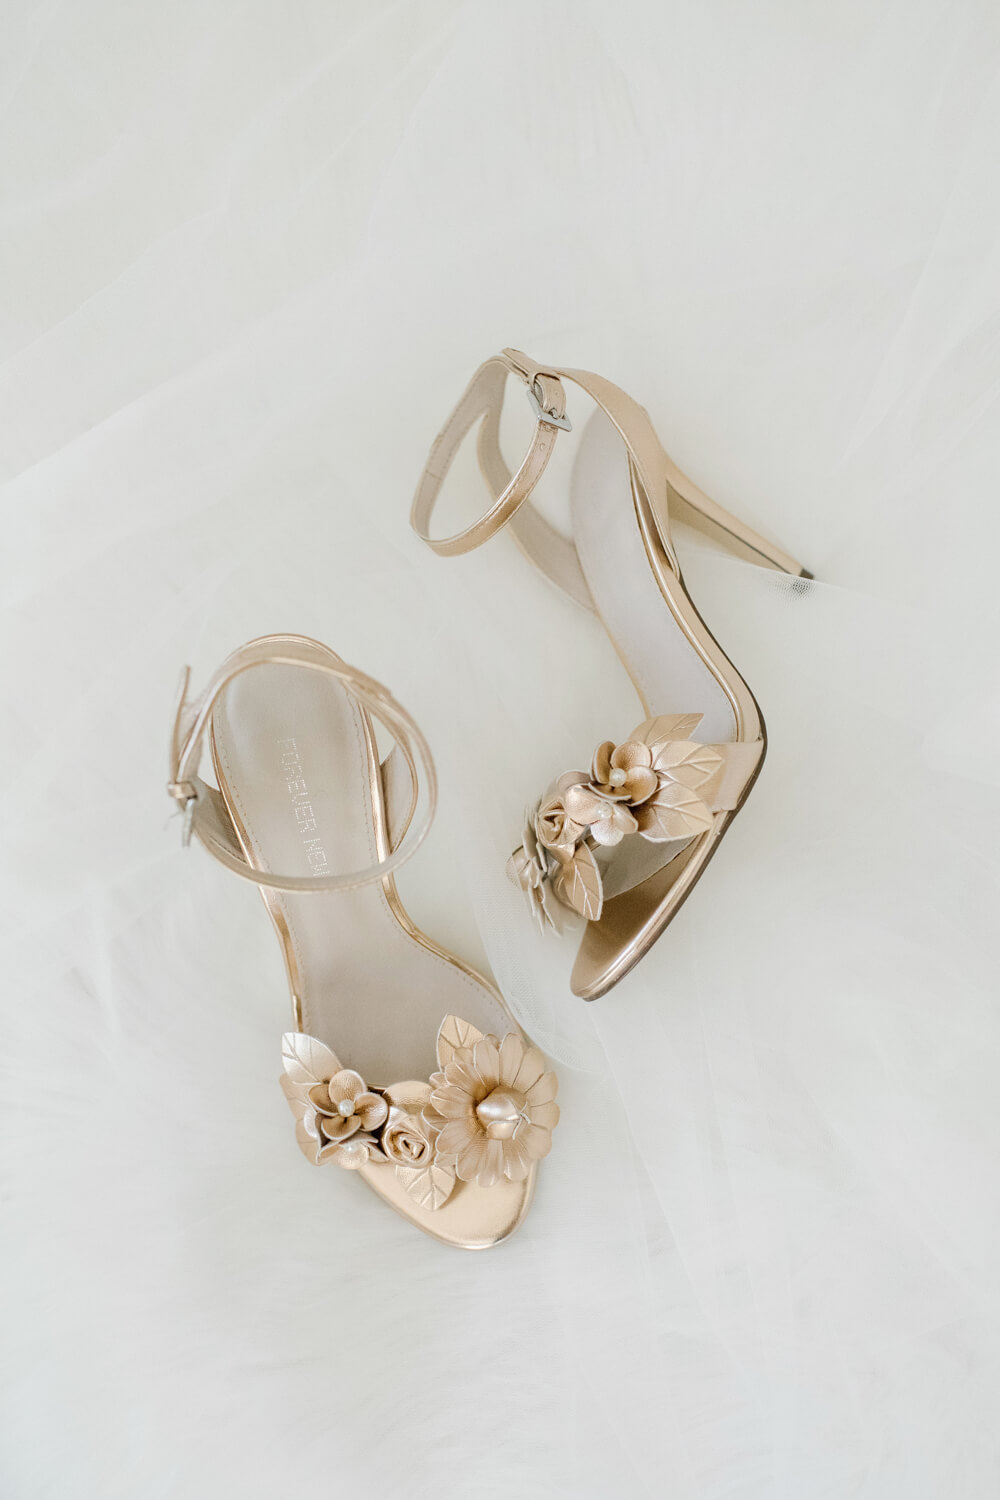 Alicia Landman Wedding Shoes